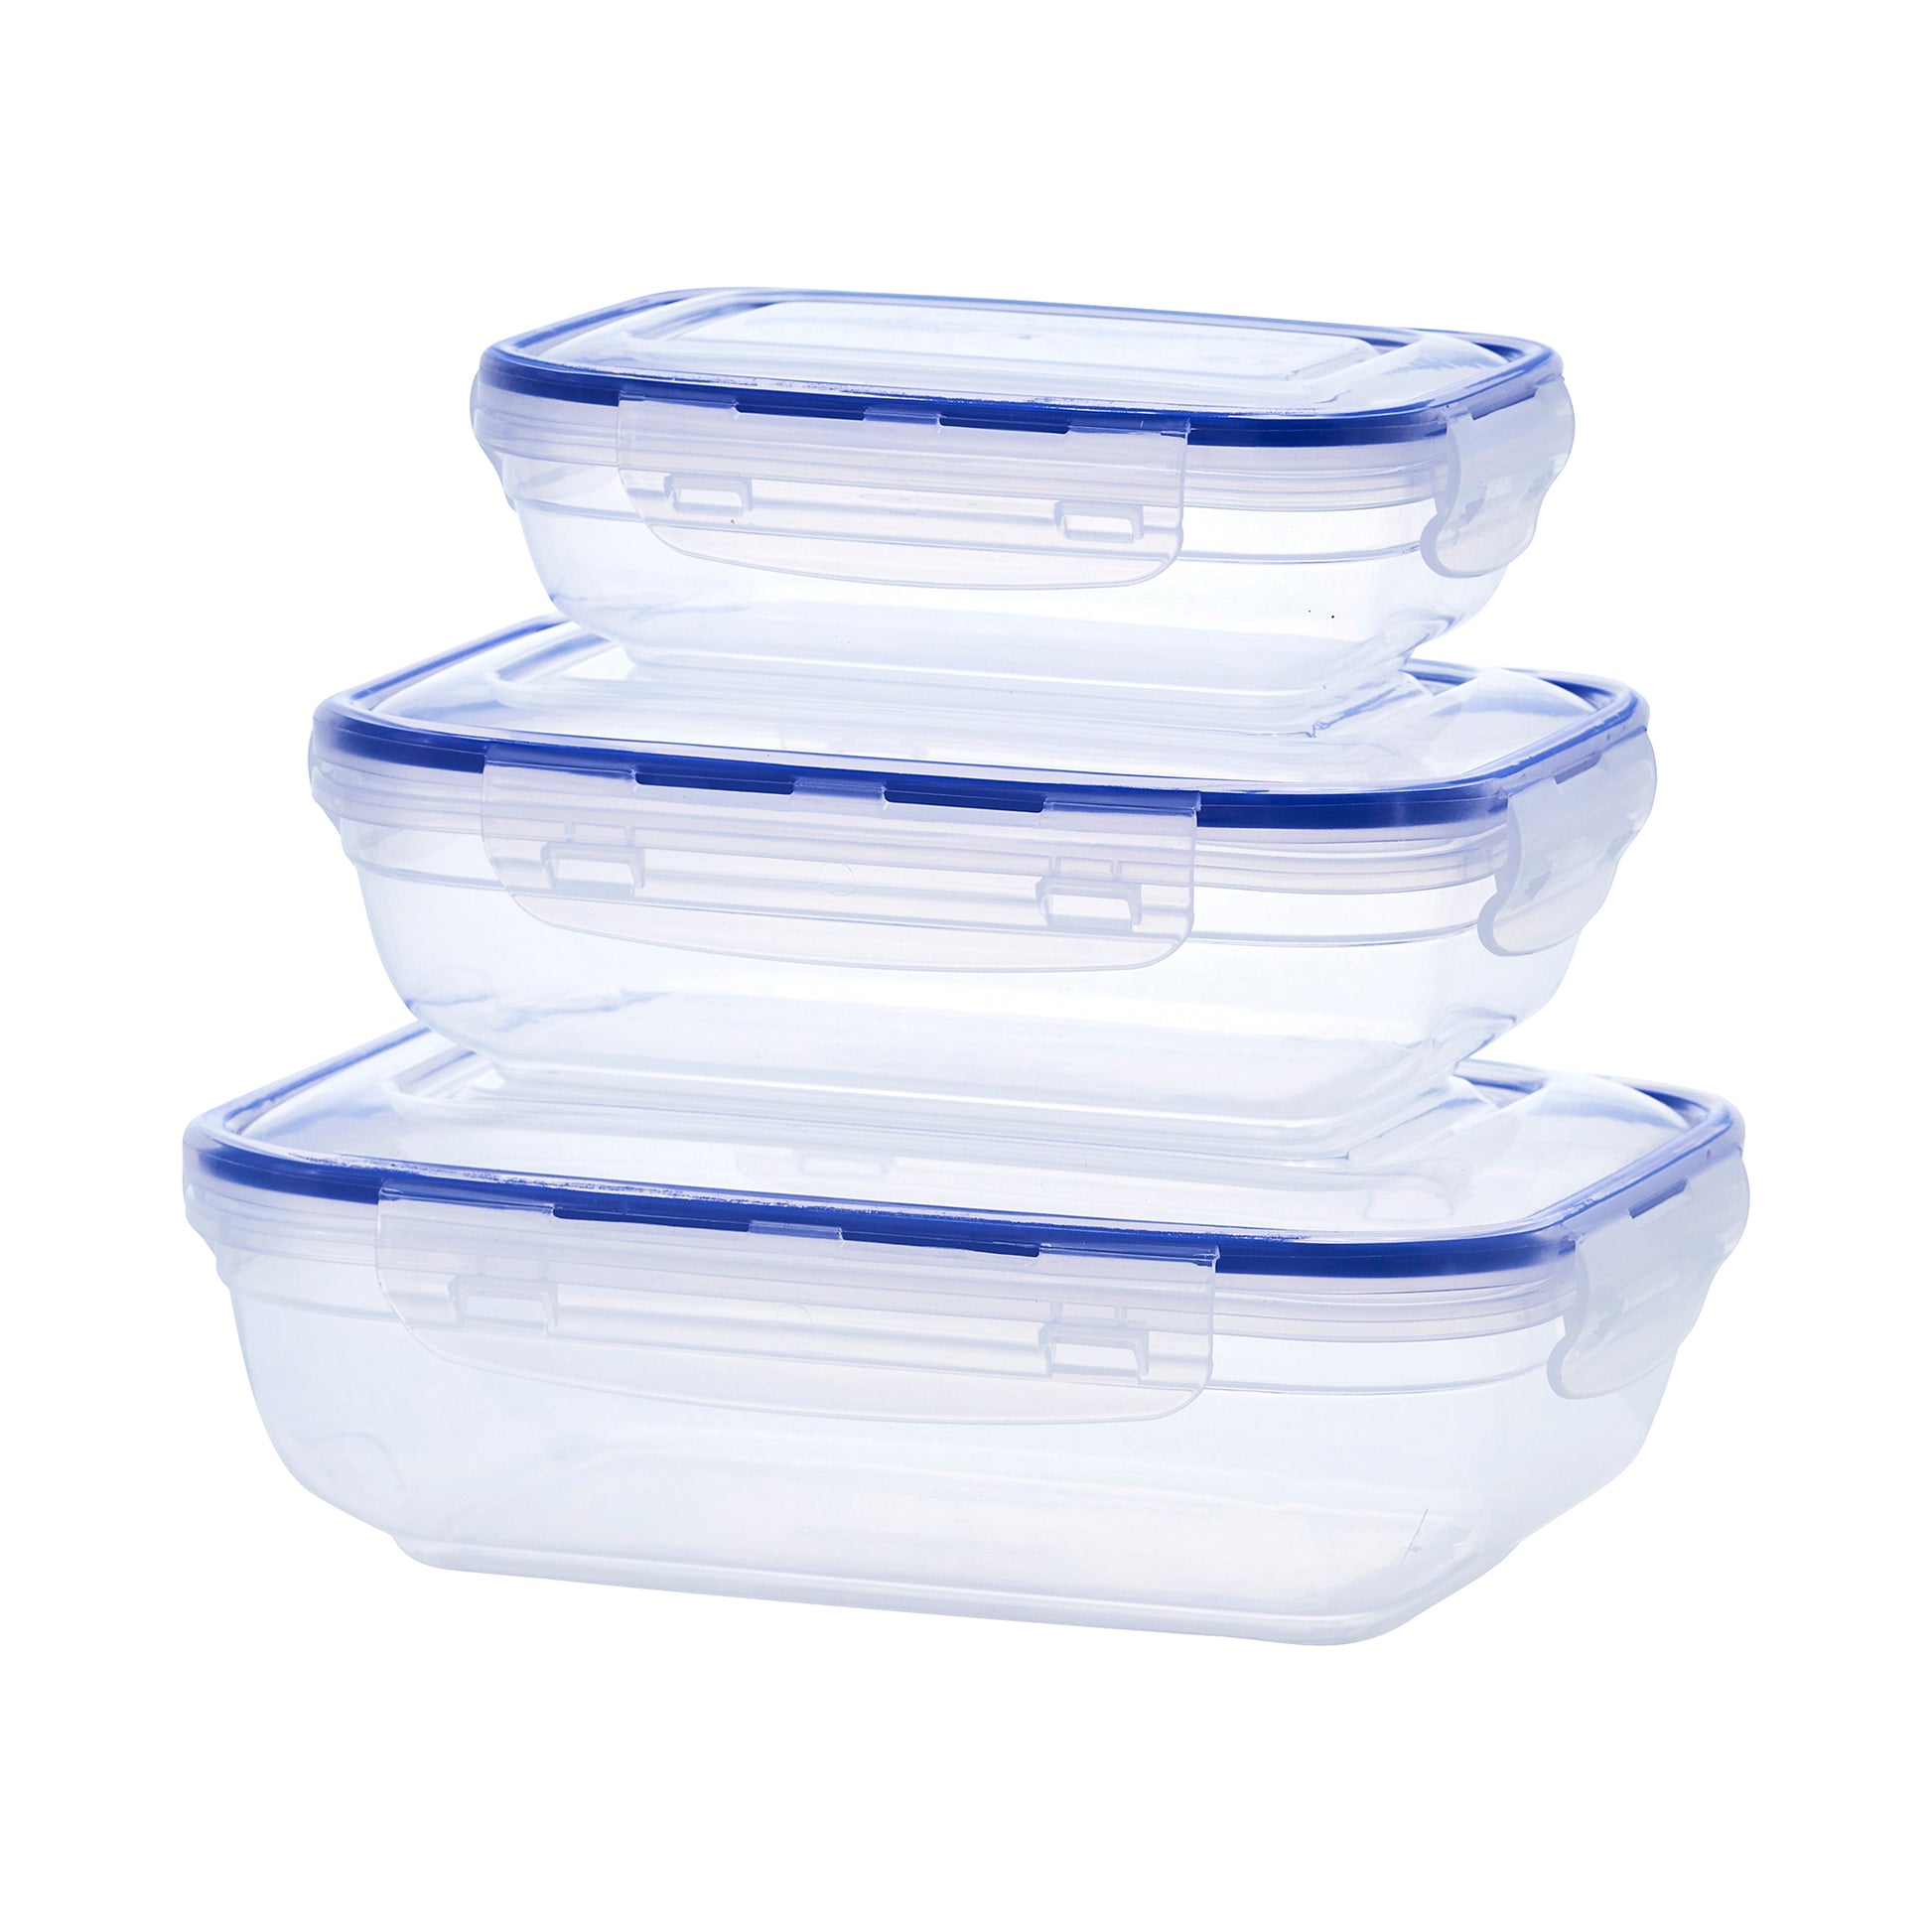 Superio Sealed Food Storage Container - Set of 3 Rectangular Shape